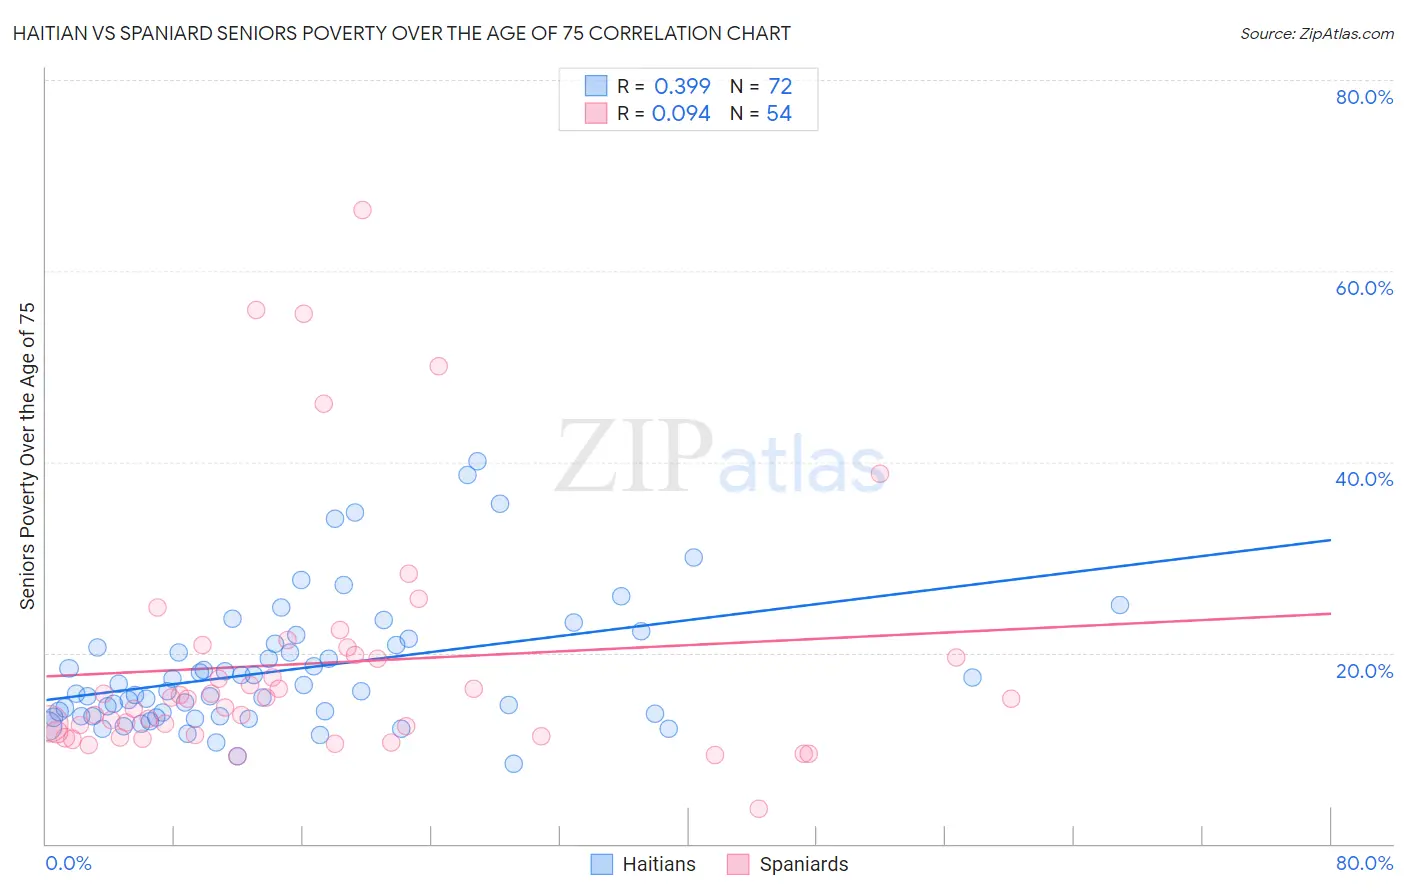 Haitian vs Spaniard Seniors Poverty Over the Age of 75